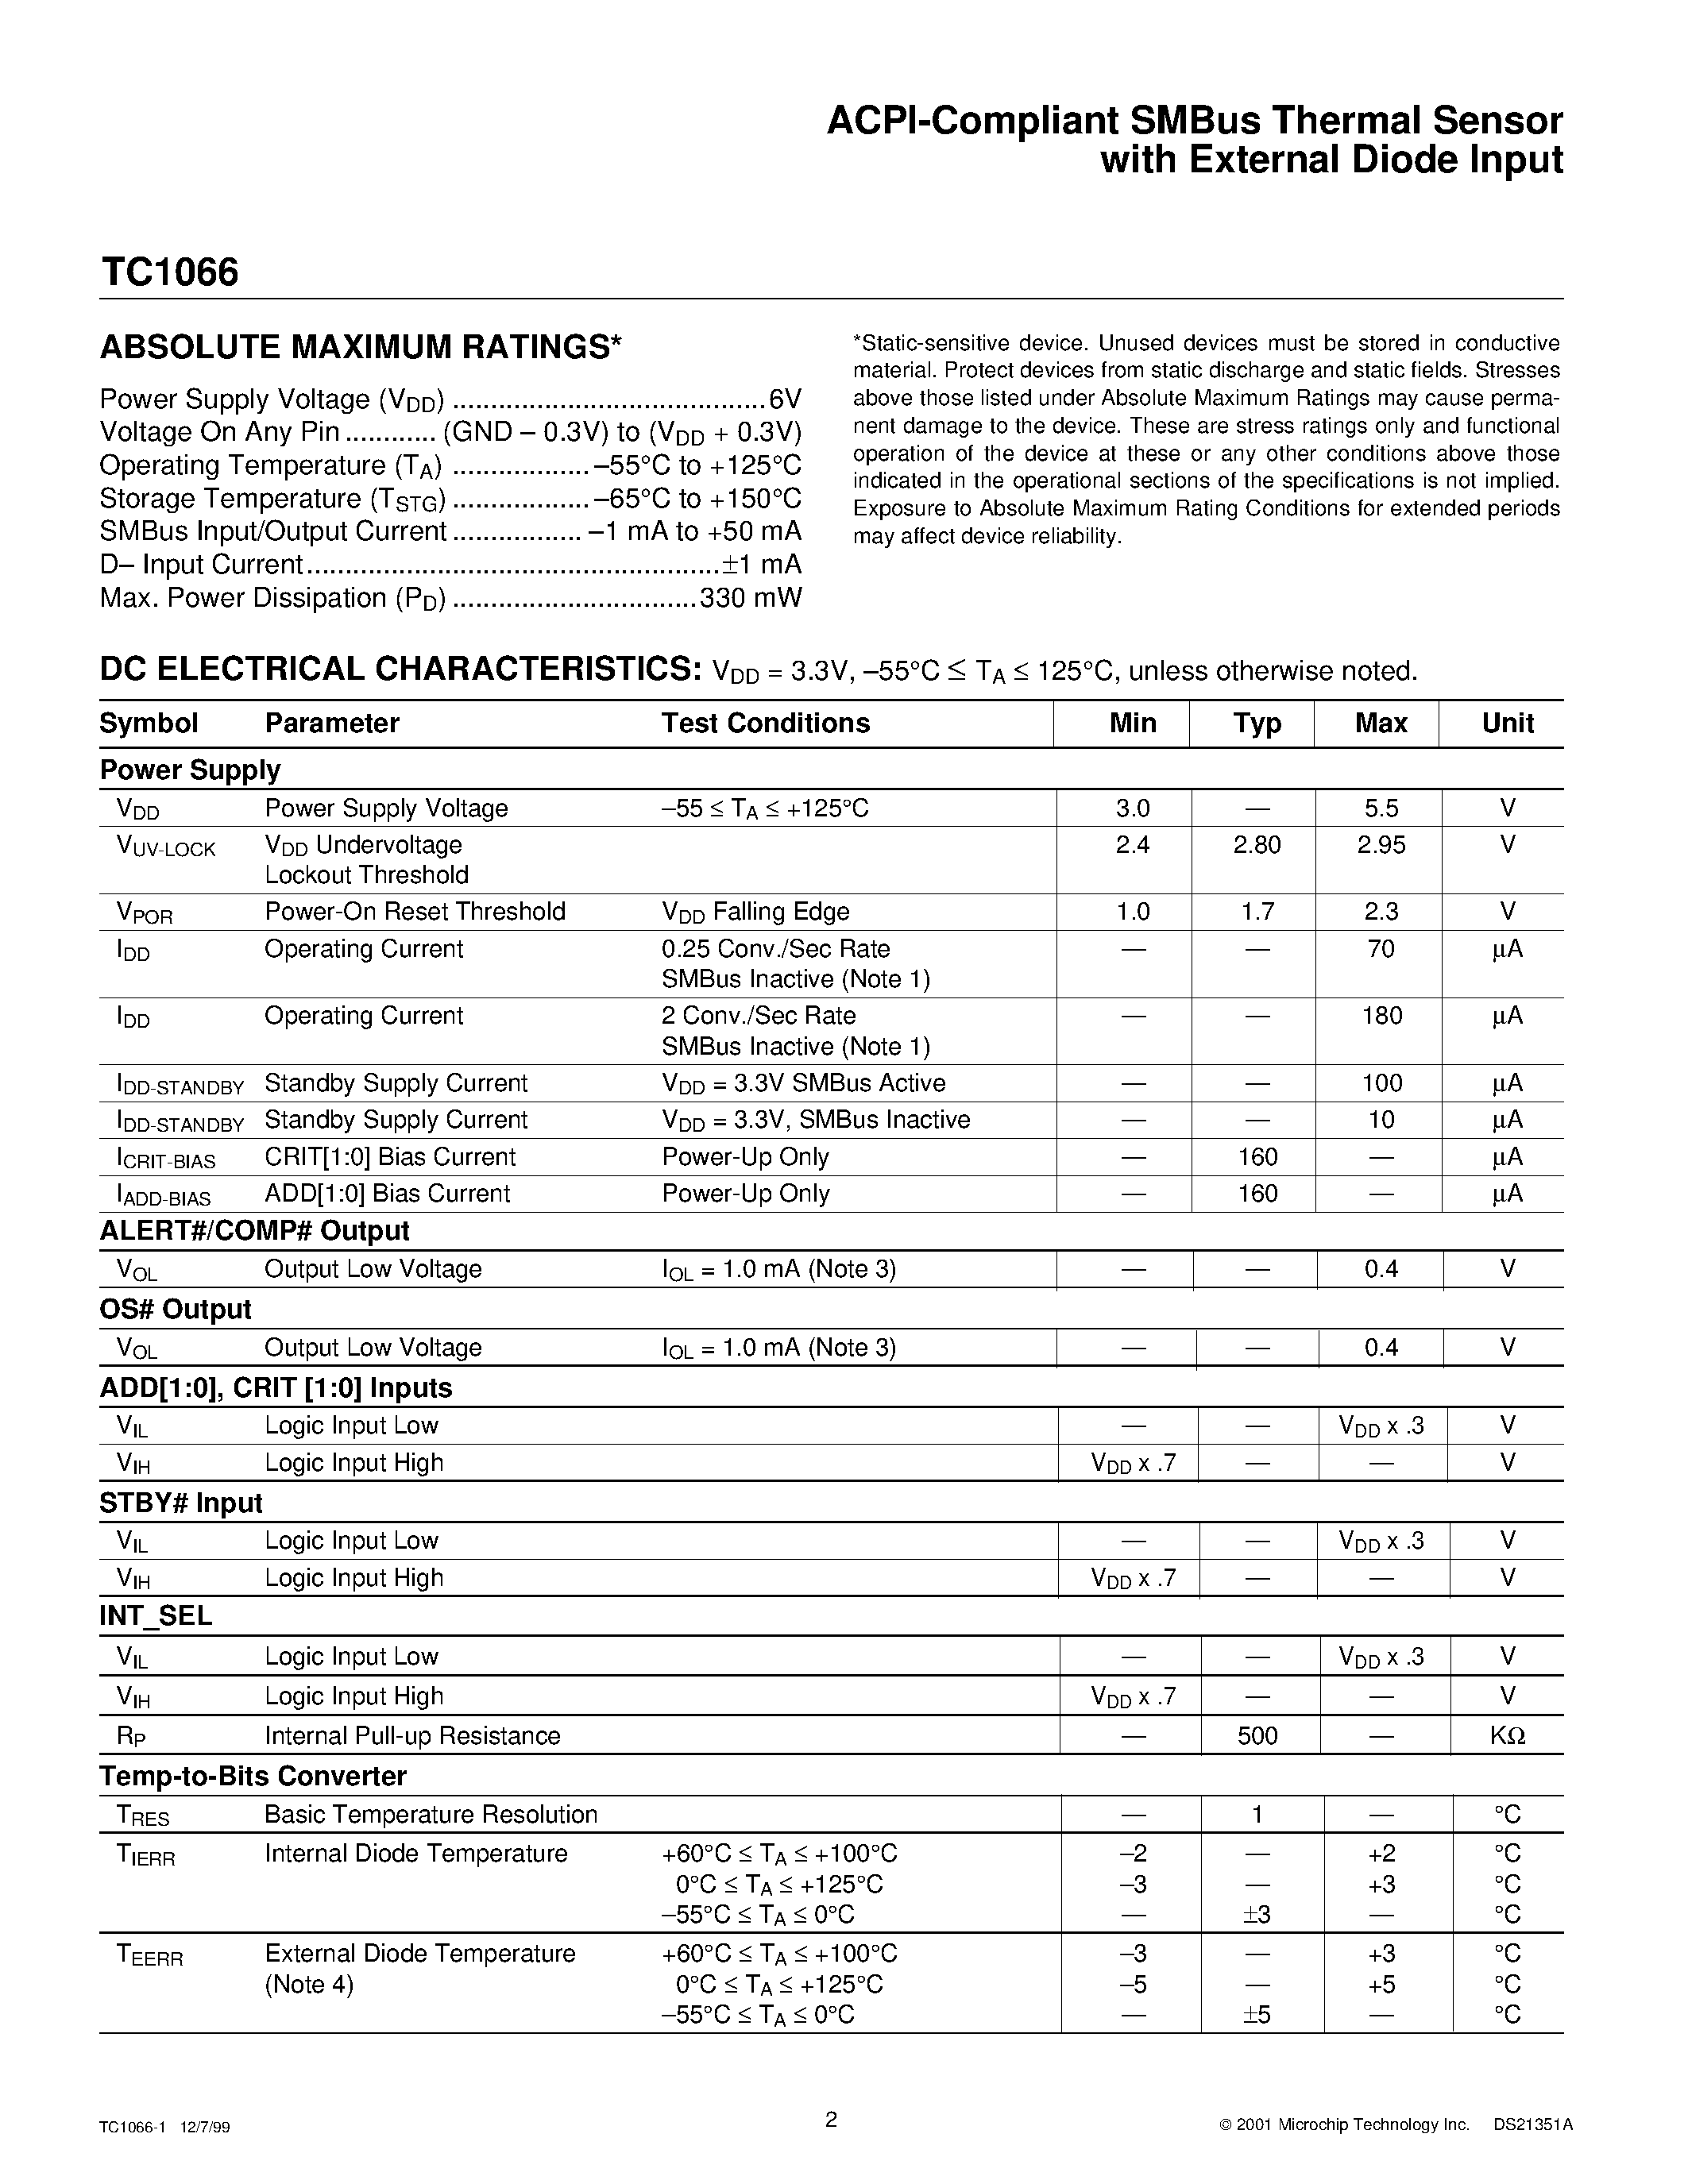 Datasheet TC1066 - ACPI Compliant SMBus Thermal Sensor page 2